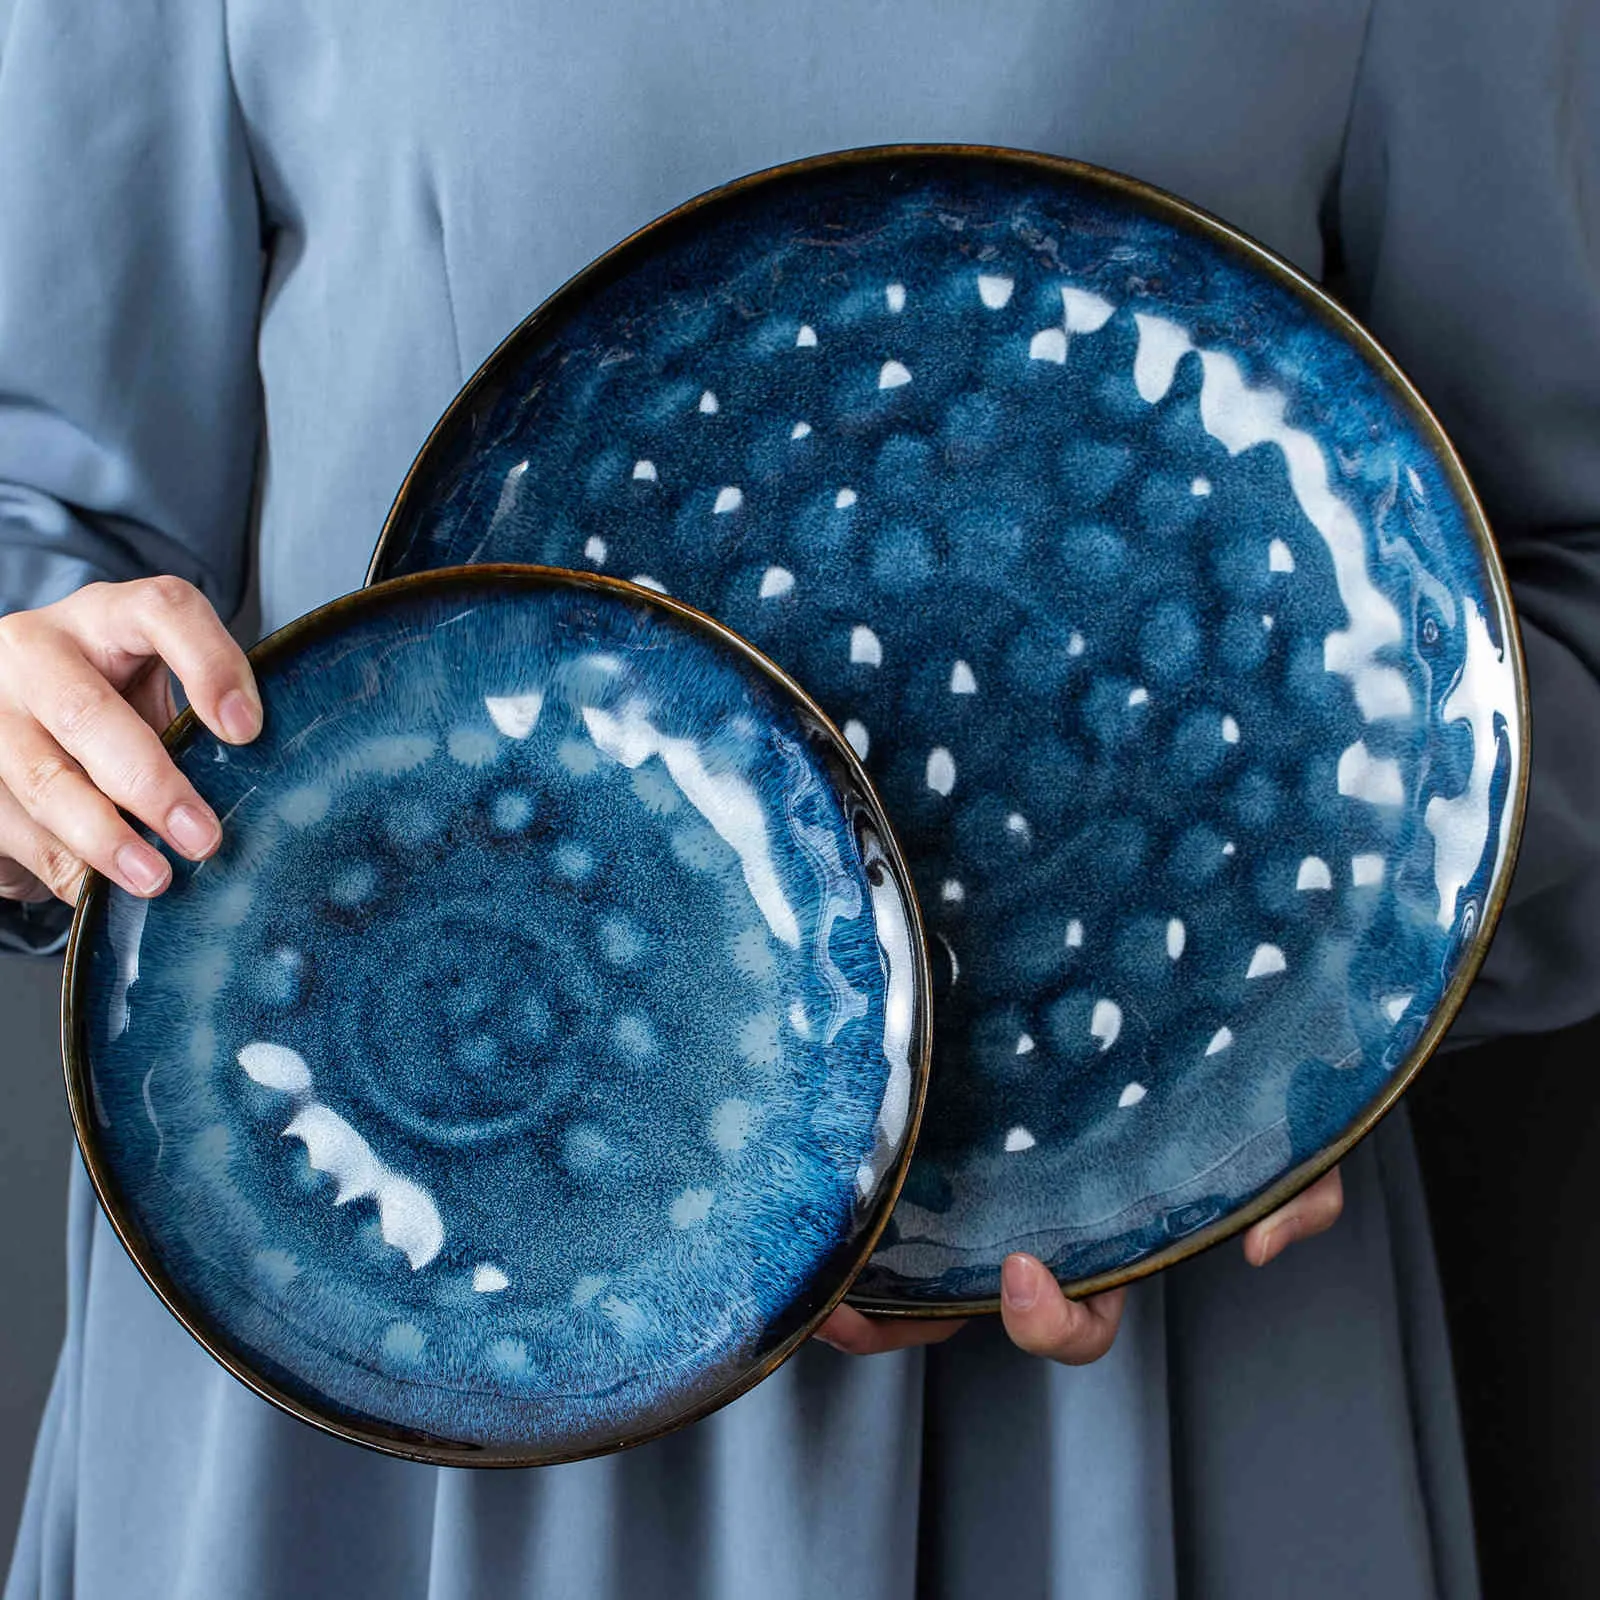 Vancasso estrelado 122436 peça conjunto de jantar estilo vintage cerâmica azul stoare conjunto de talheres com prato de jantar sobremesa platebowl 21078911015